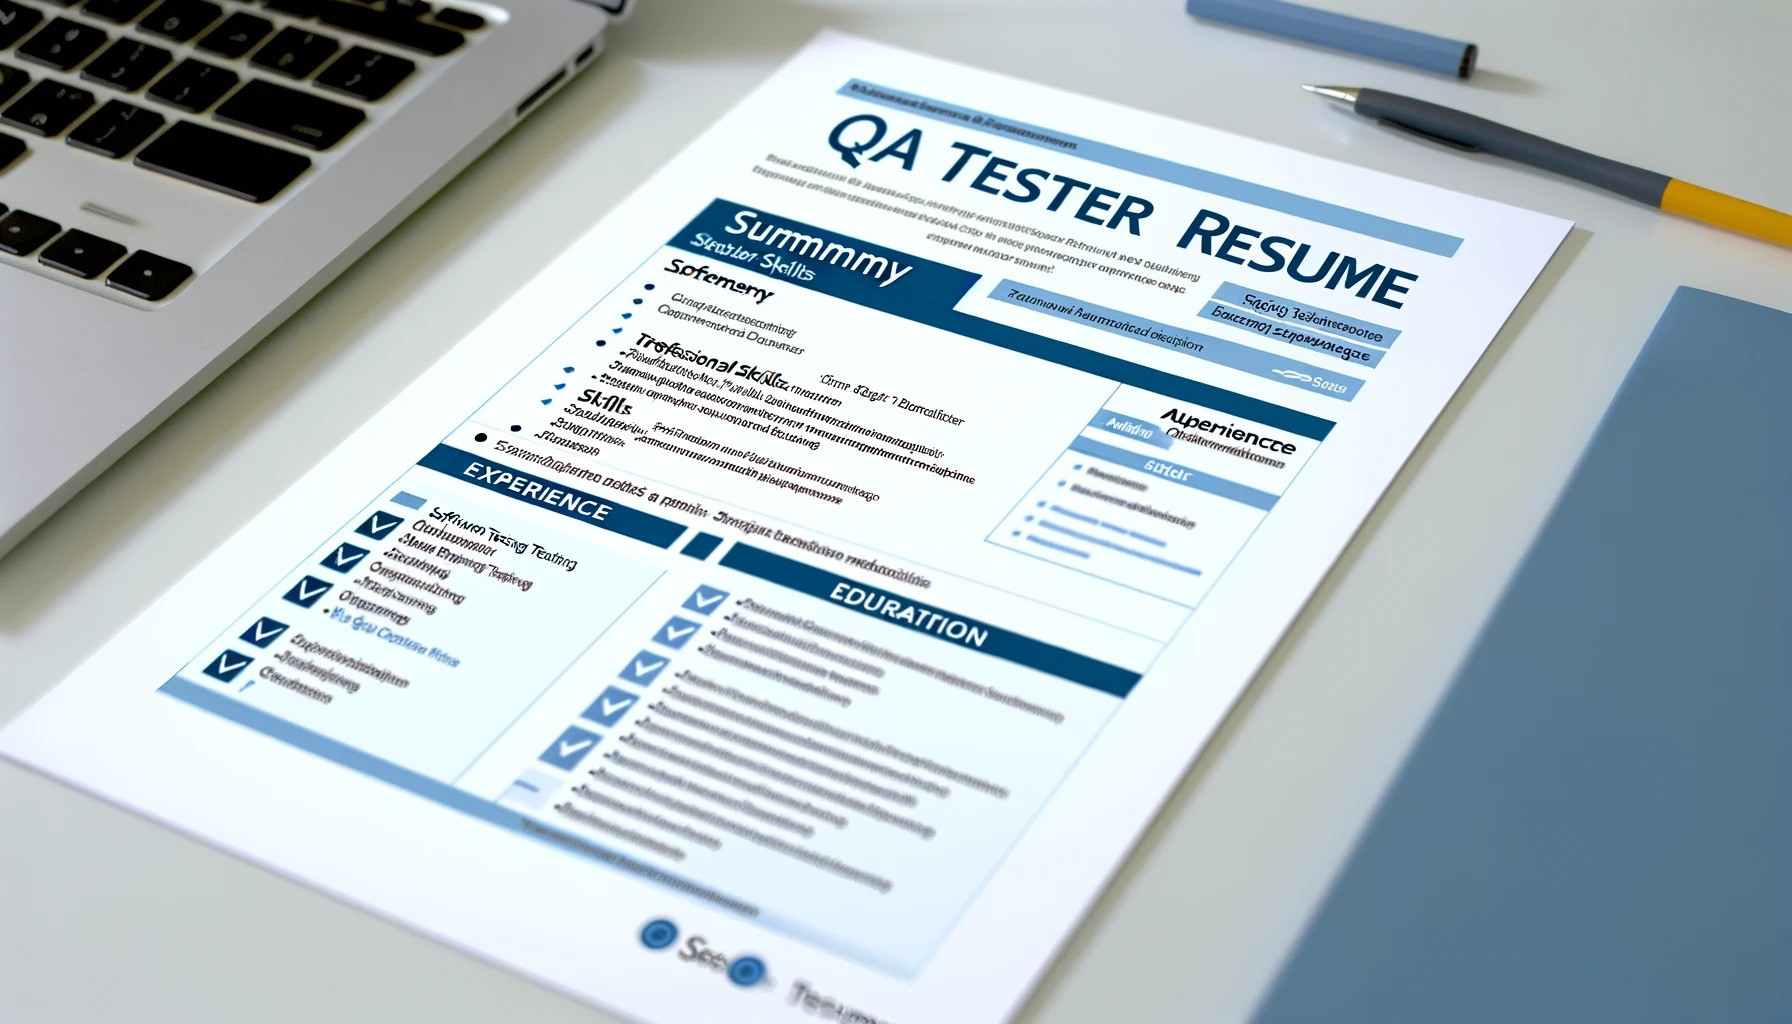 QA Tester Skills Resume